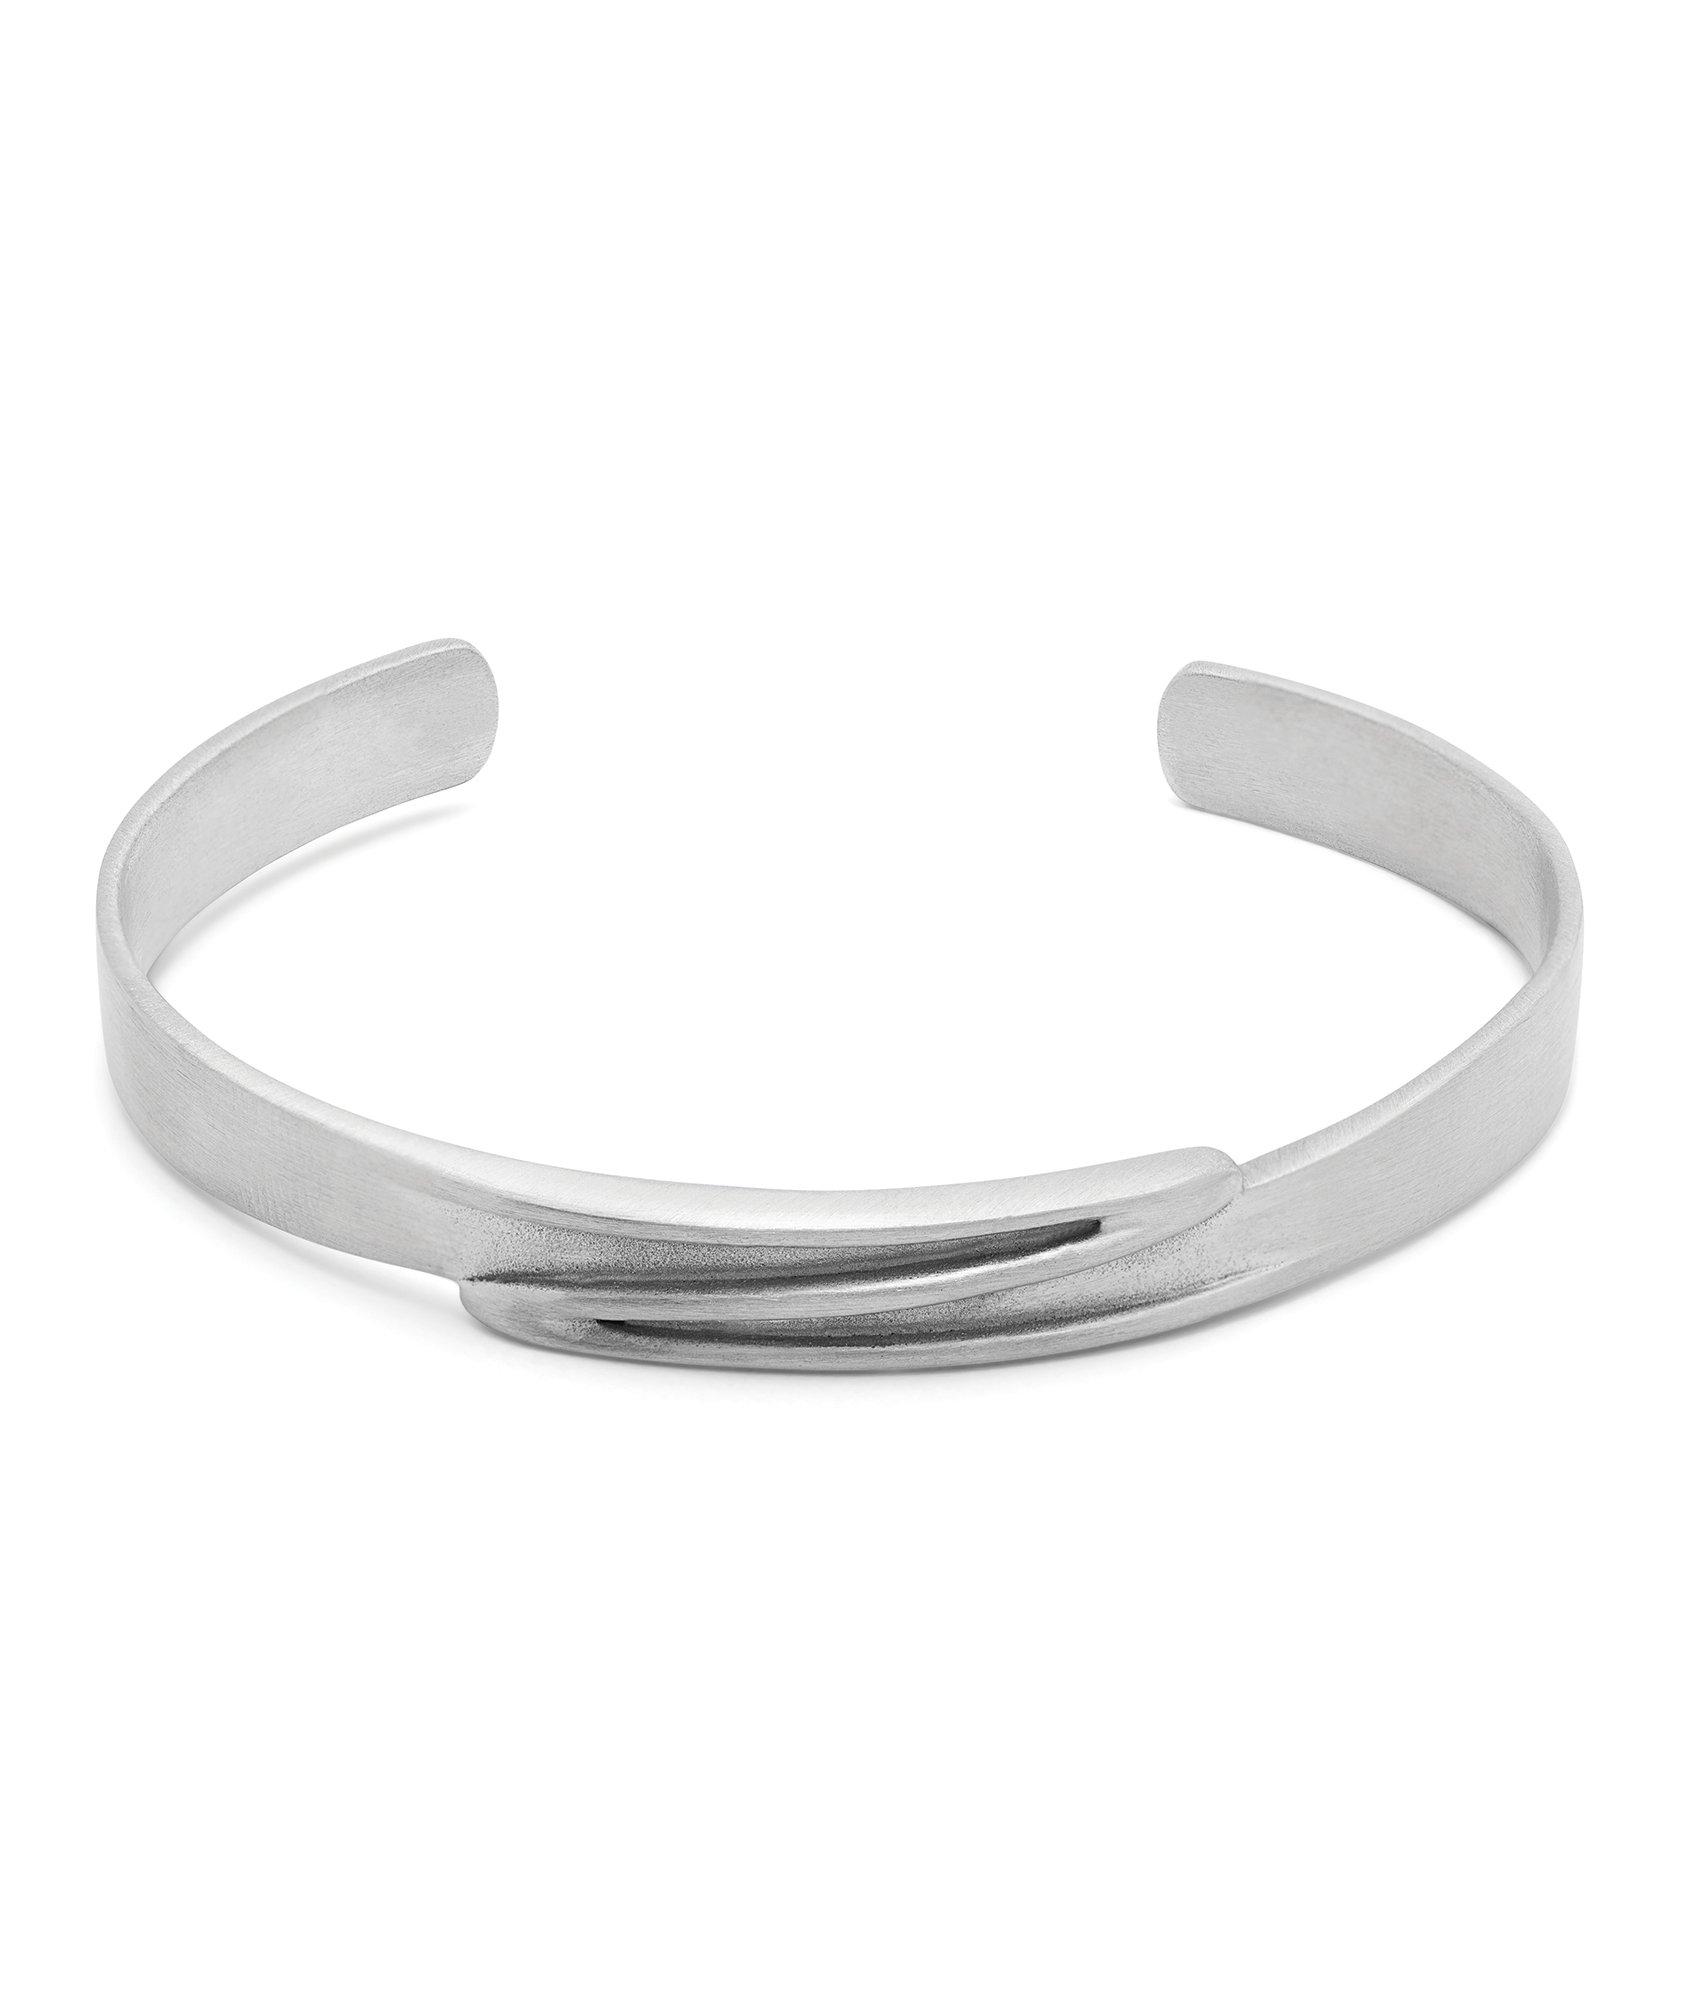 Zaha Hadid Metal Bracelet image 0